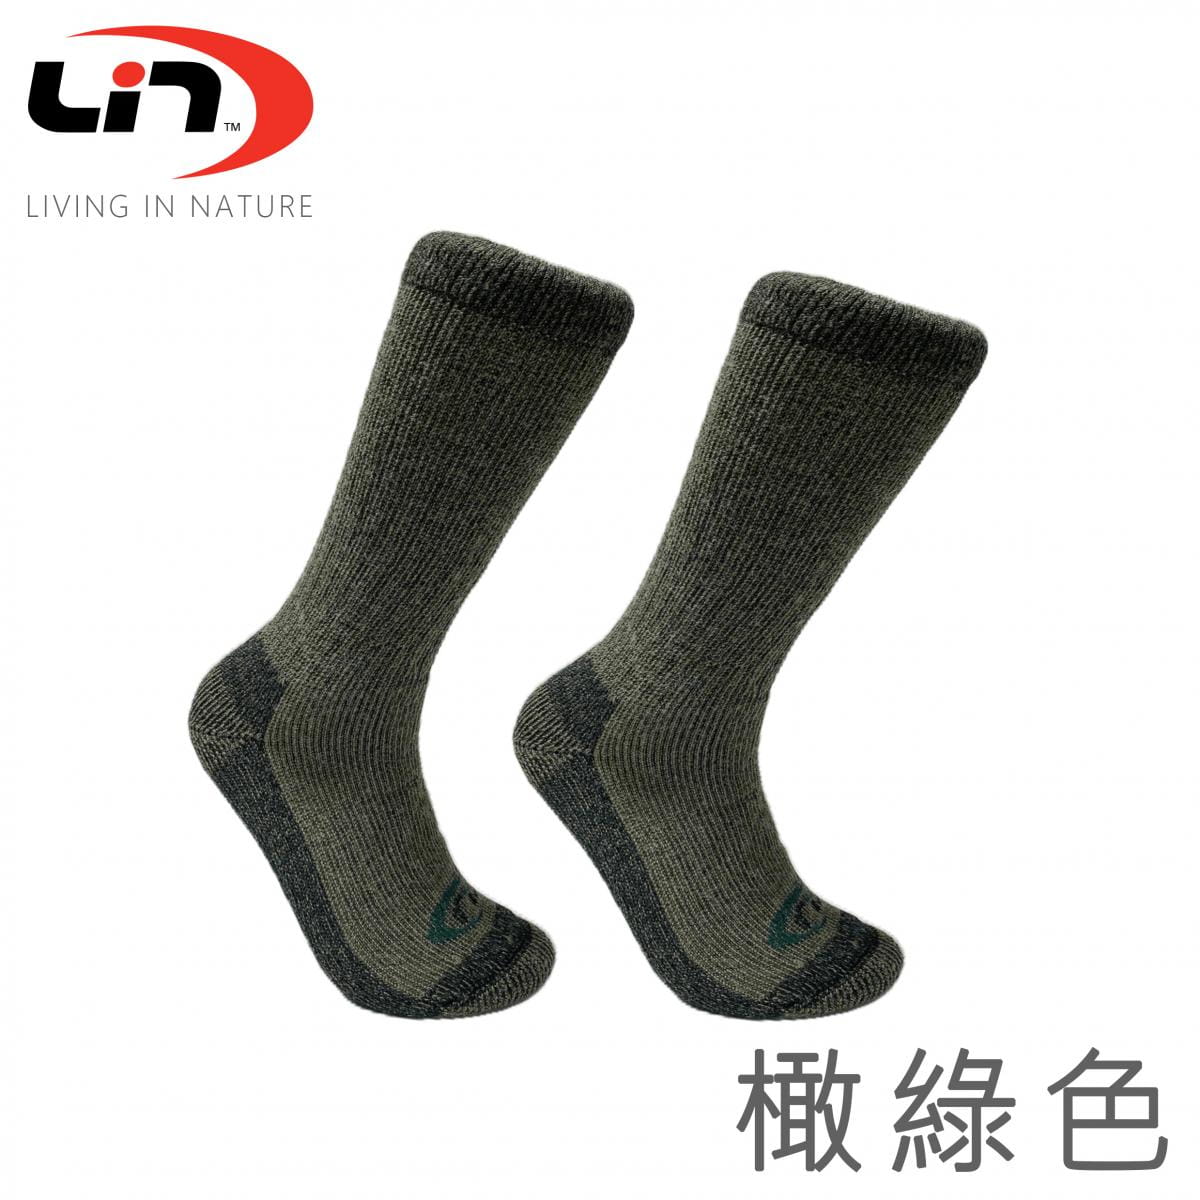 【Lin】LIN OUTDOOR 抗菌混紡羊毛全毛圈登山襪 4